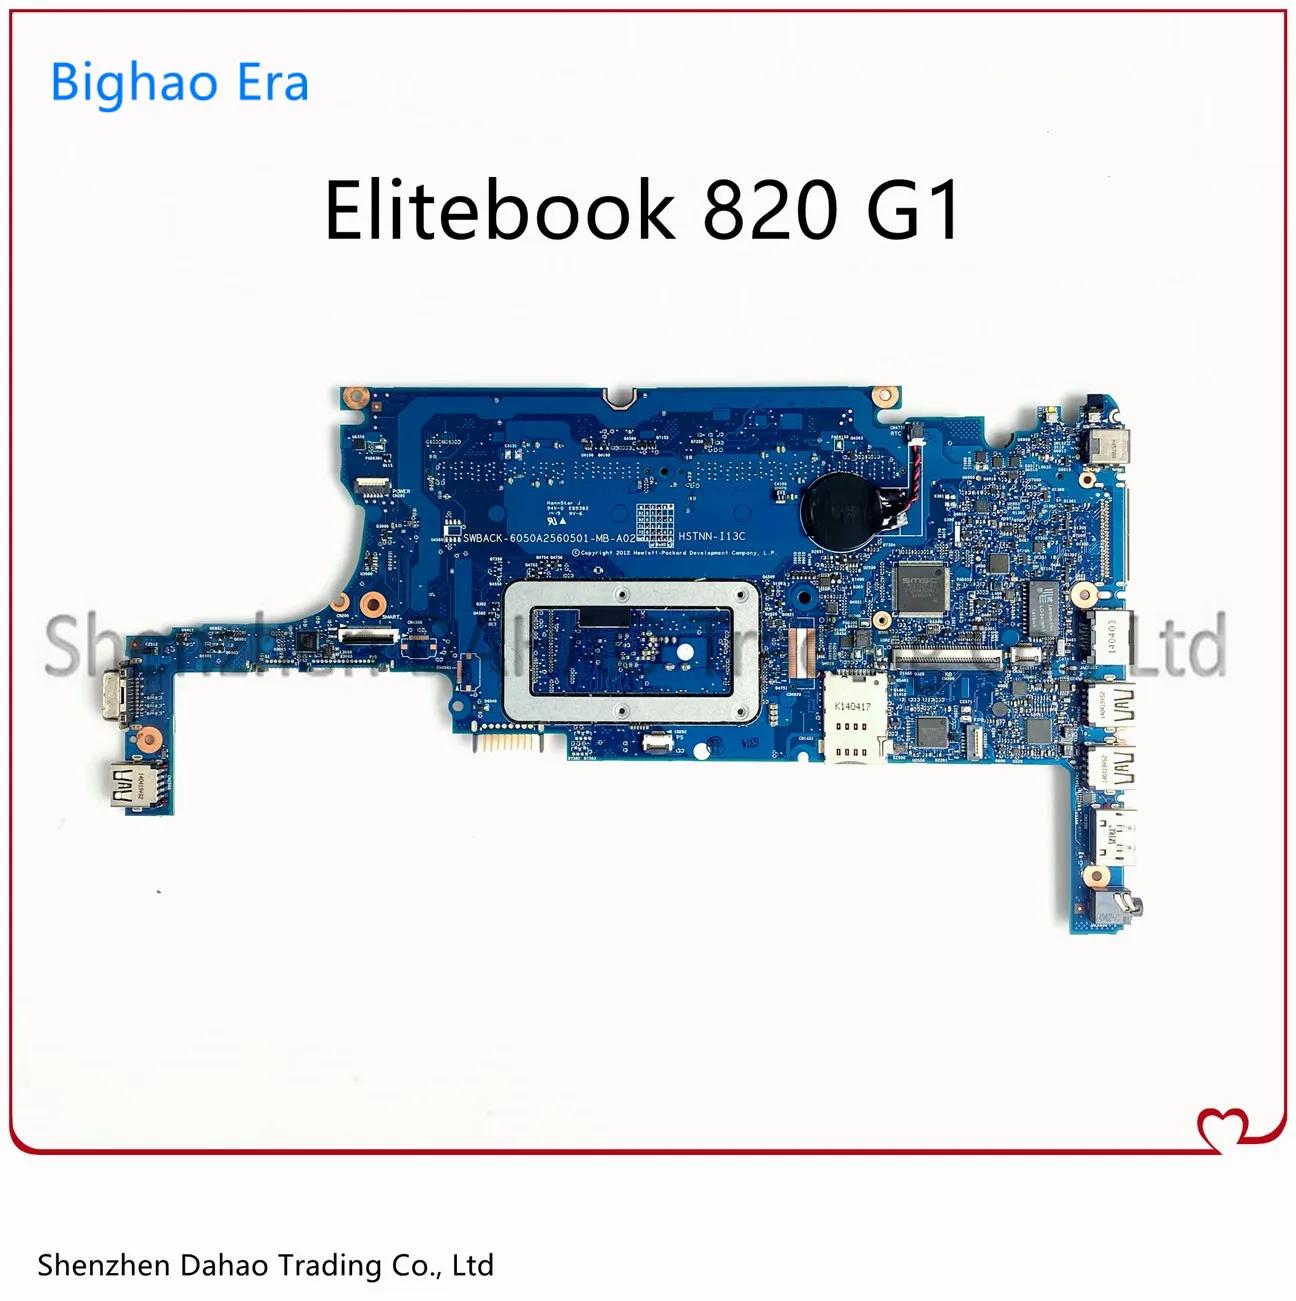 hewlett-packard hp elitebook 820 g1 drivers - Does HP EliteBook 820 G1 have Bluetooth